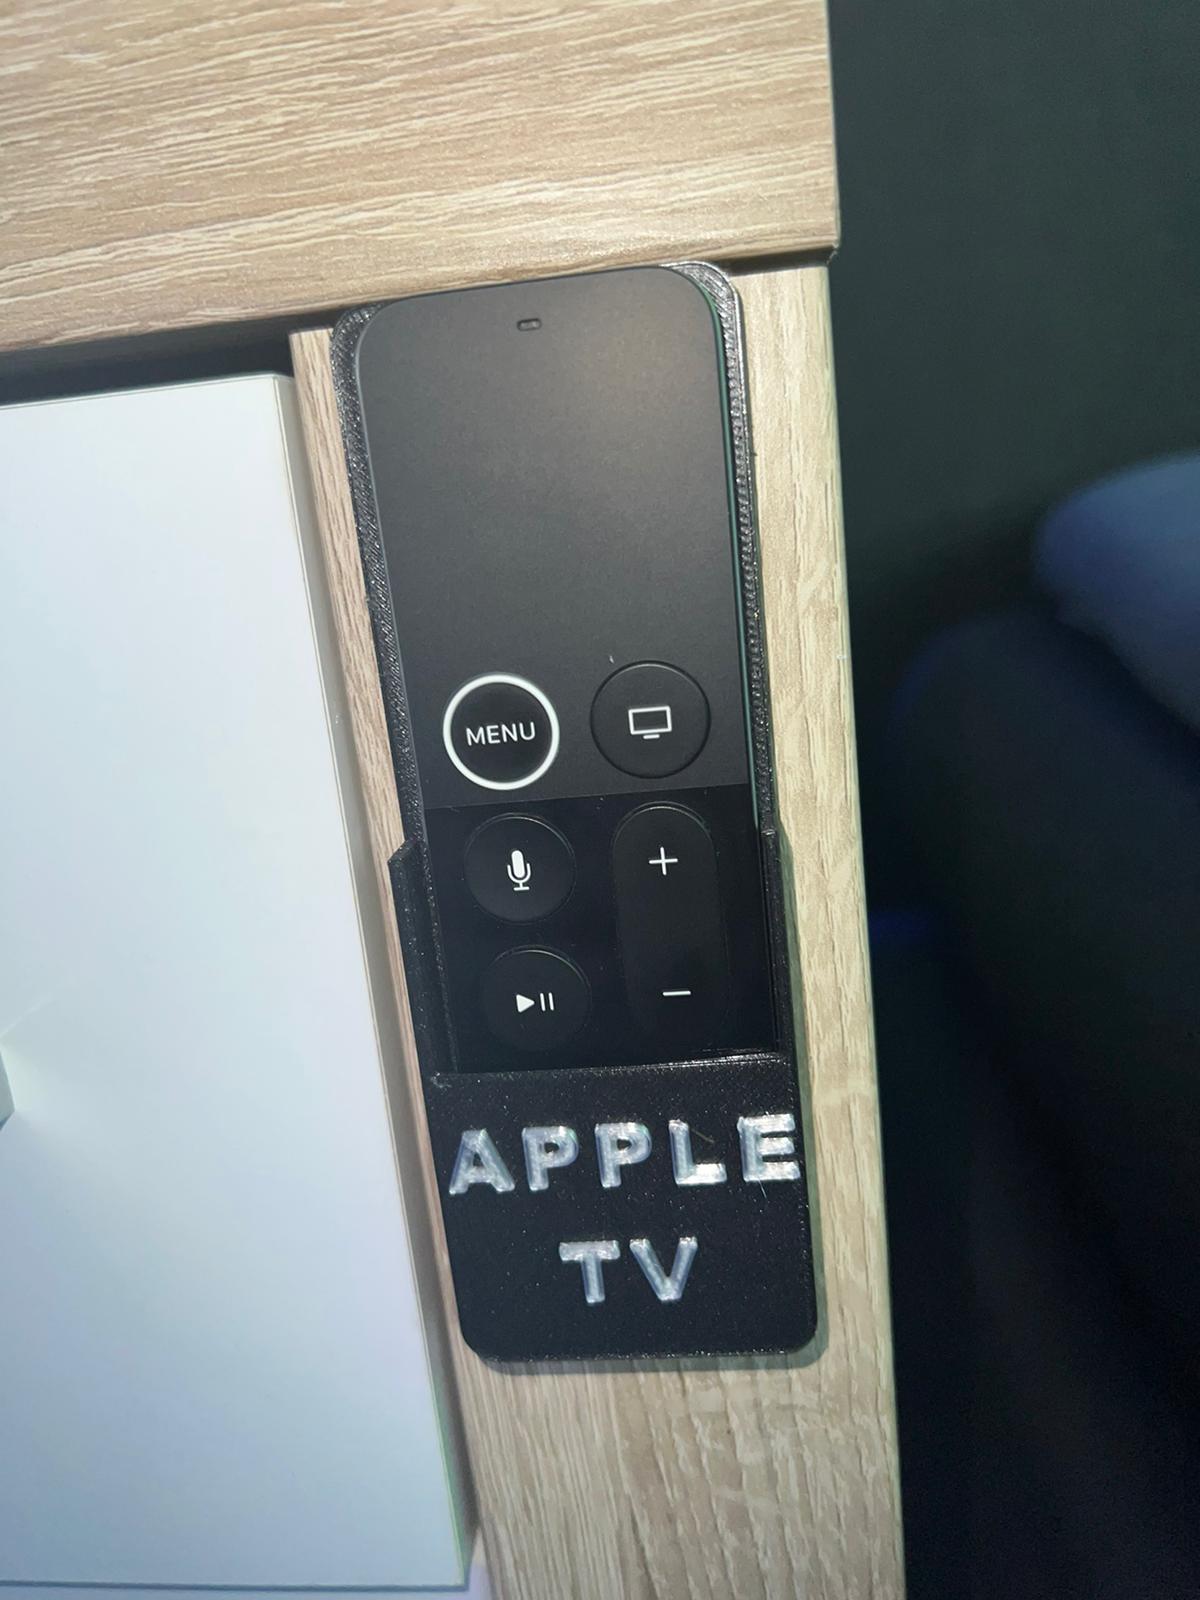 Apple TV bracket for remote control